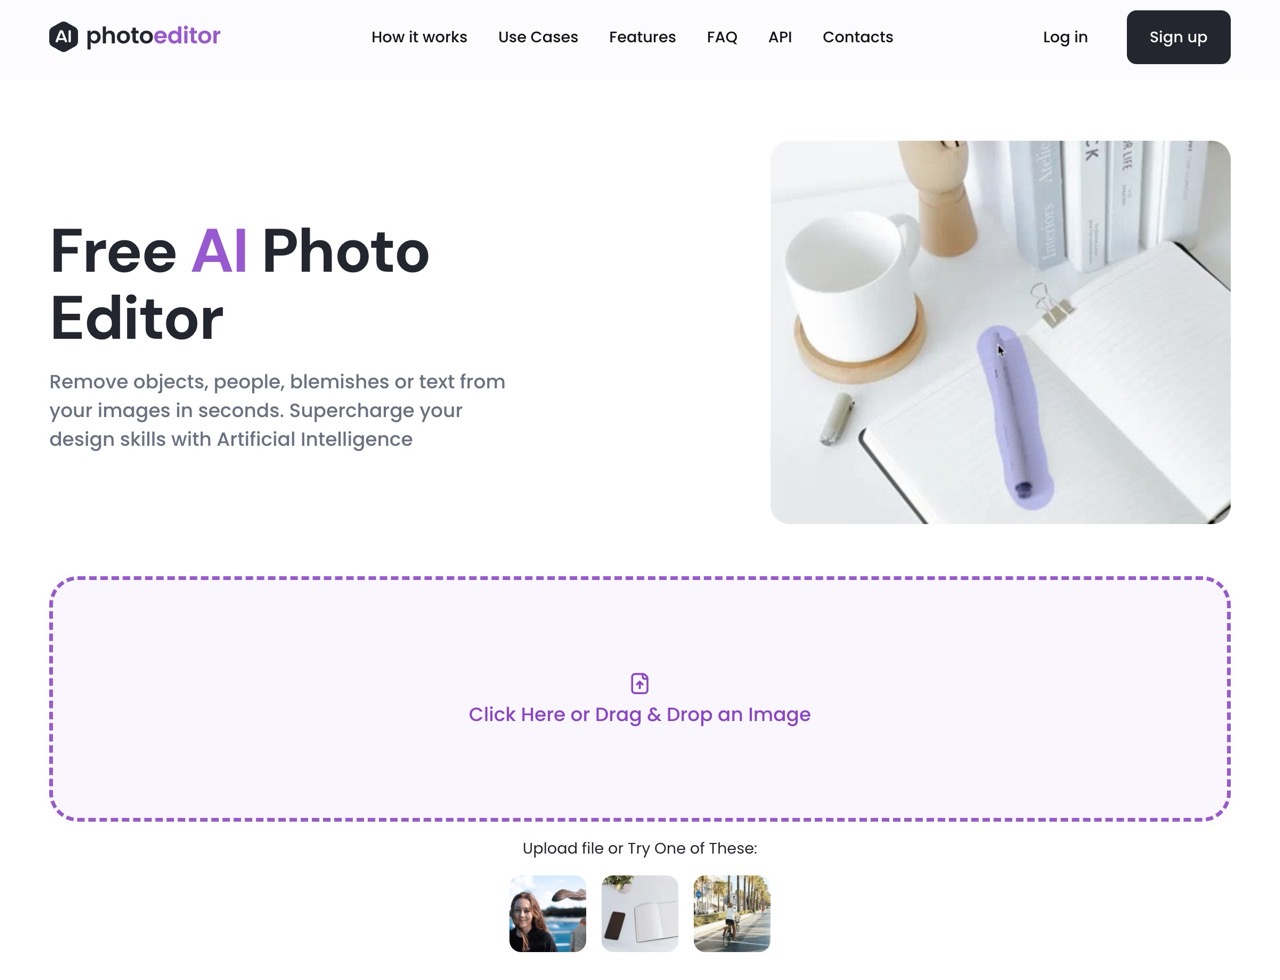 PhotoEditor 以 AI 技術快速移除相片中的物品、人物或文字，免費且易用